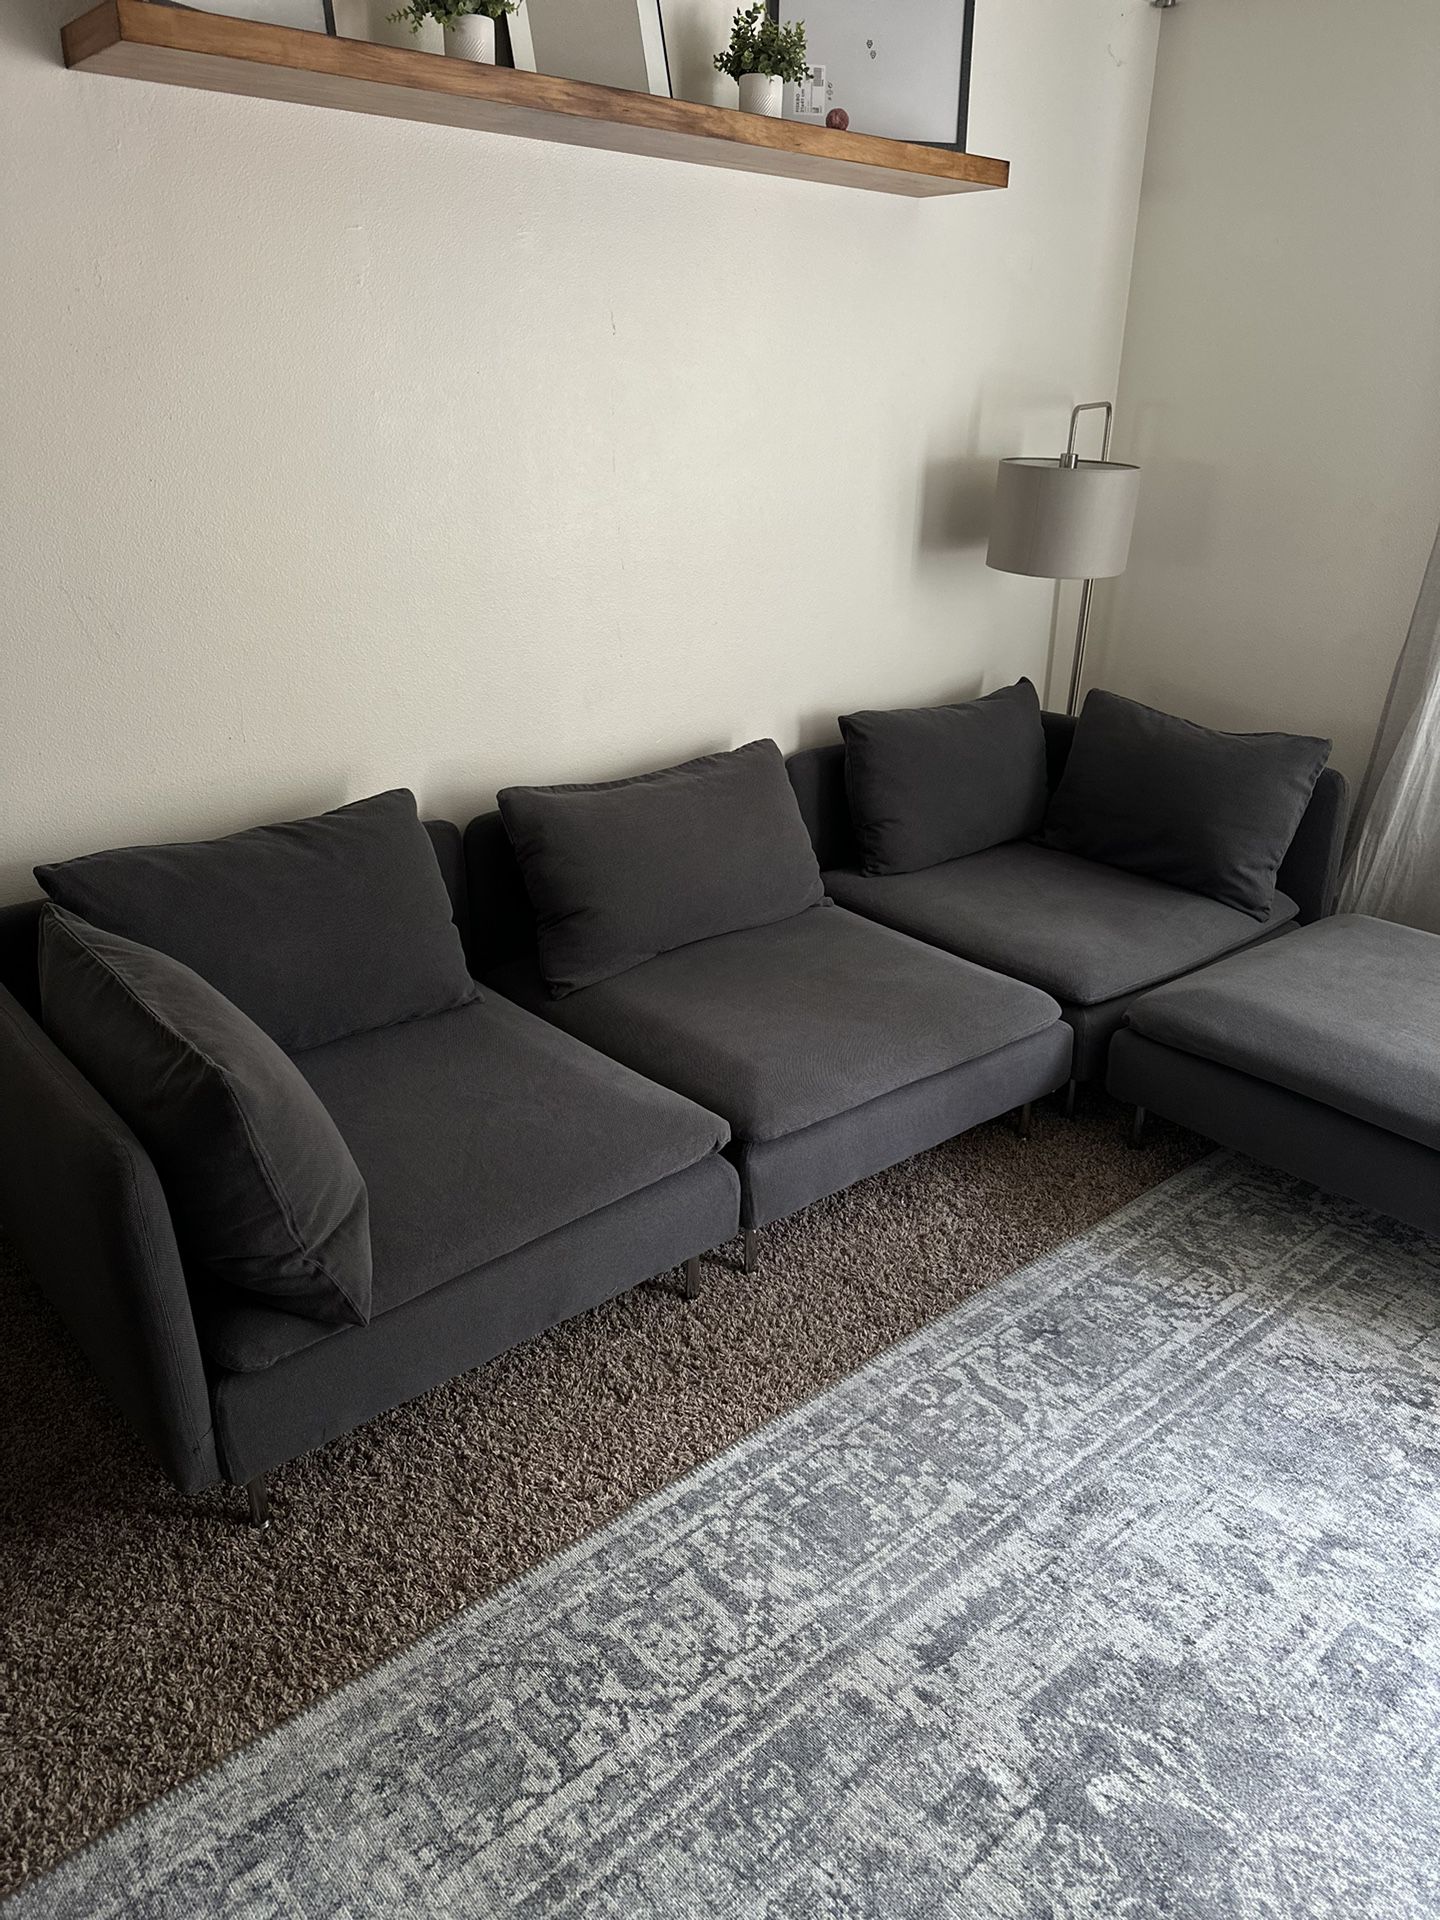 NEW Soderhamn IKEA 3 seats and ottoman Covers And Sofa